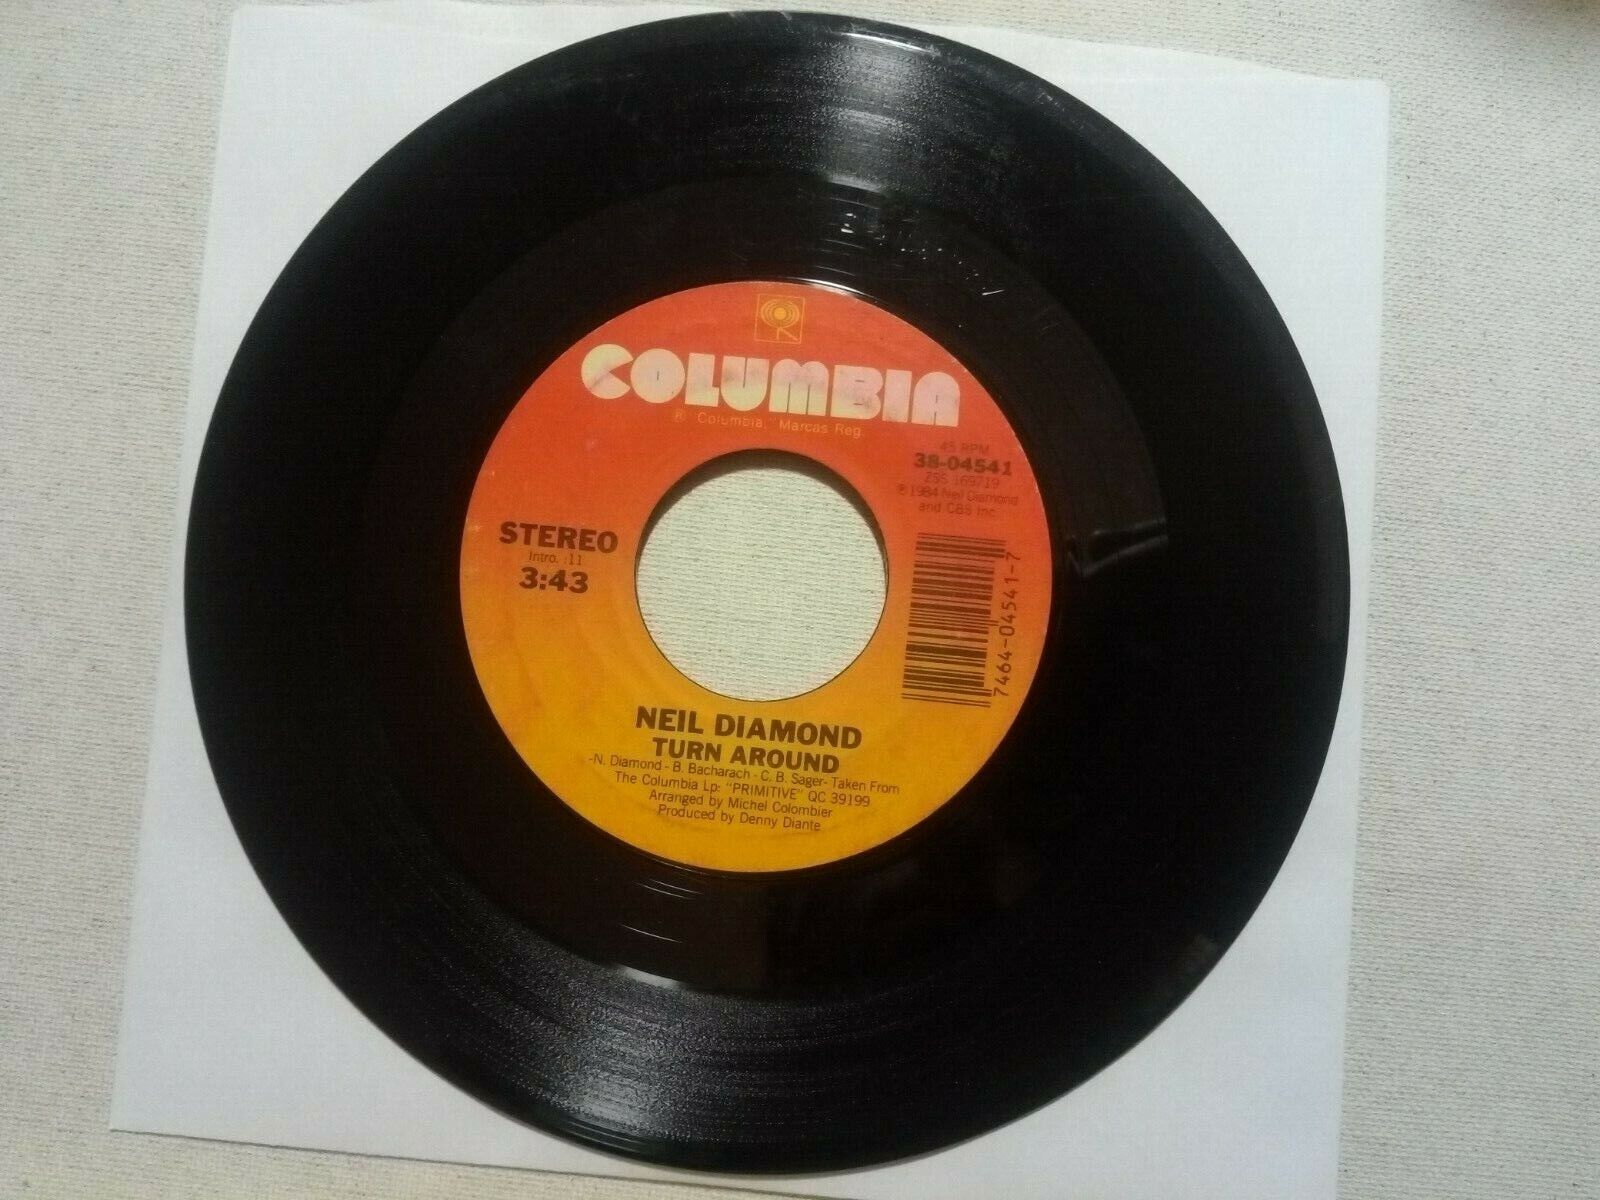 [1984] Neil Diamond: Turn Around/ Brooklyn Bridge [VG] 7" vinyl record, Columbia